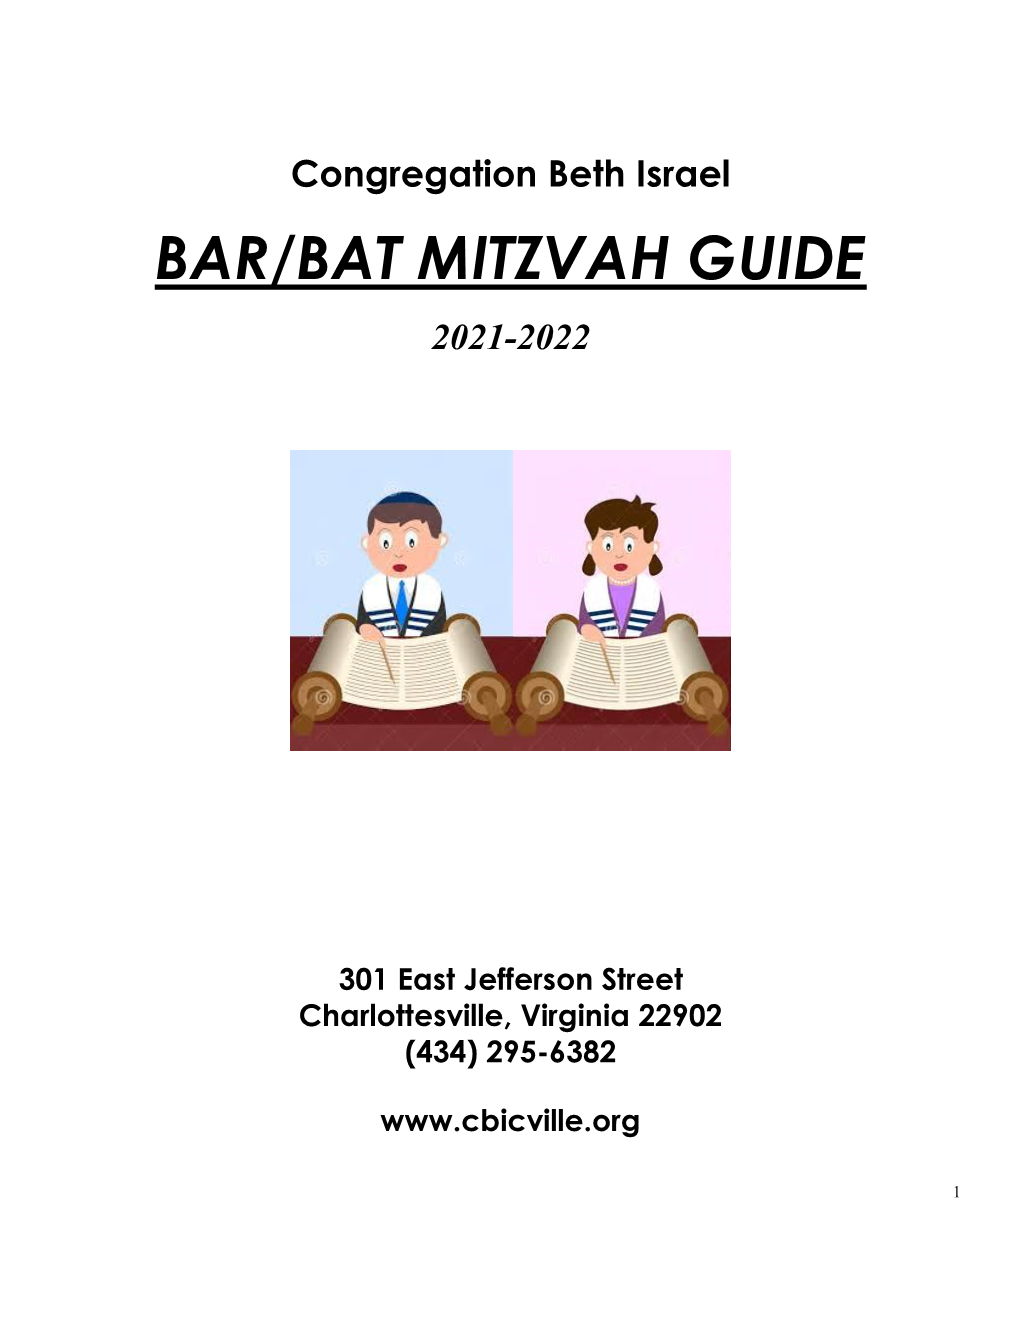 The Bar/Bat Mitzvah Handbook